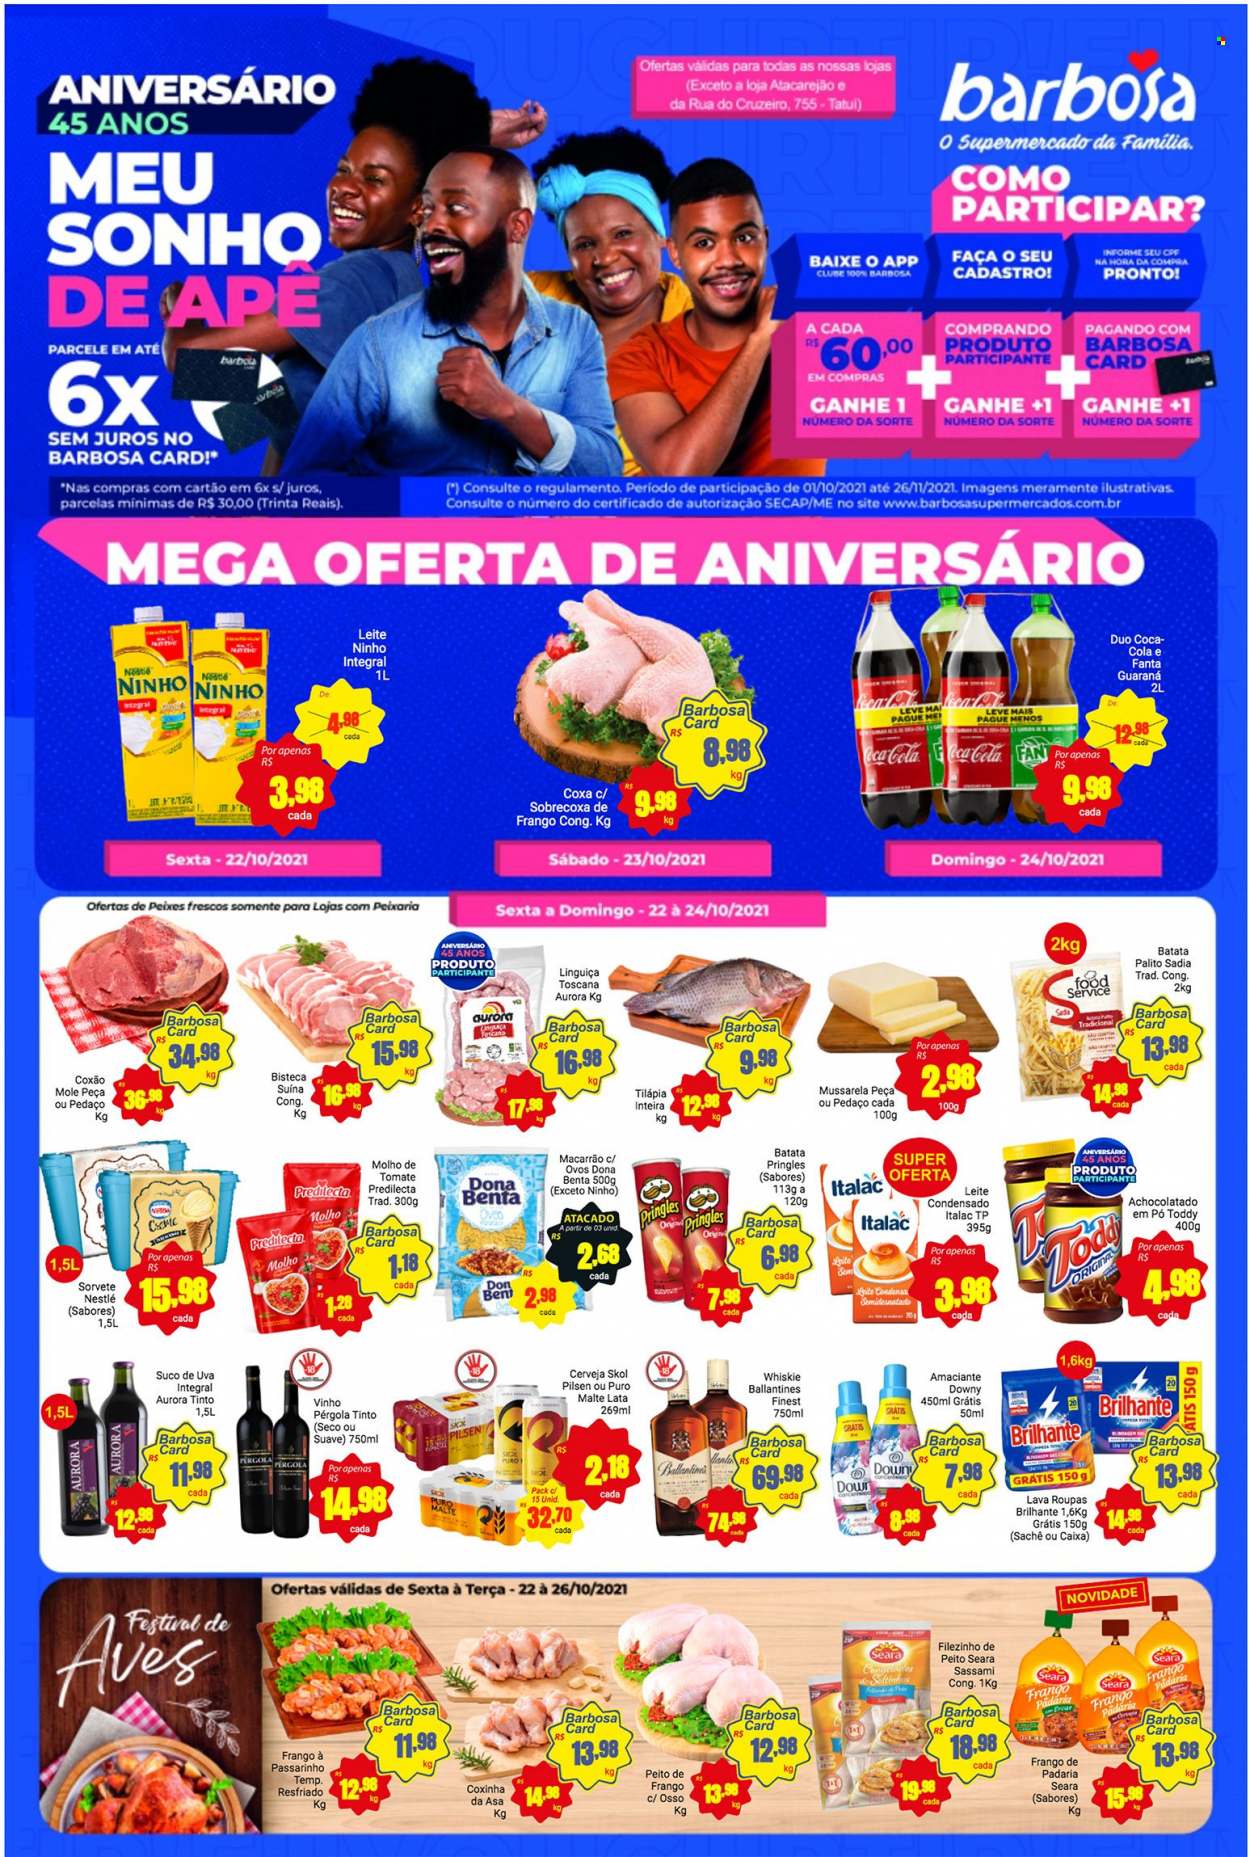 Encarte Barbosa Supermercados  - 22.10.2021 - 26.10.2021.